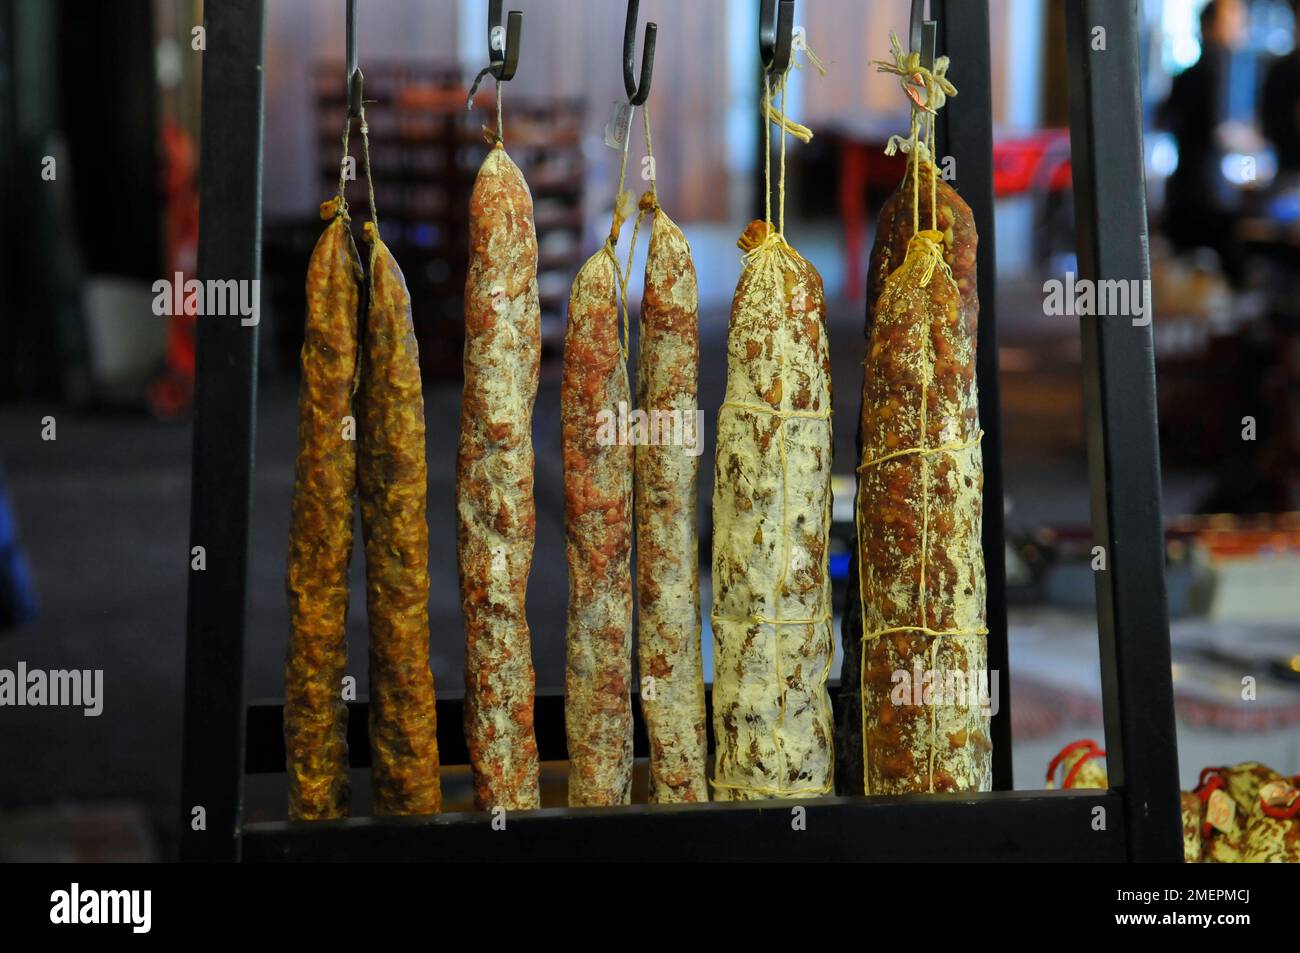 Sausages hanging at market stall Stock Photo